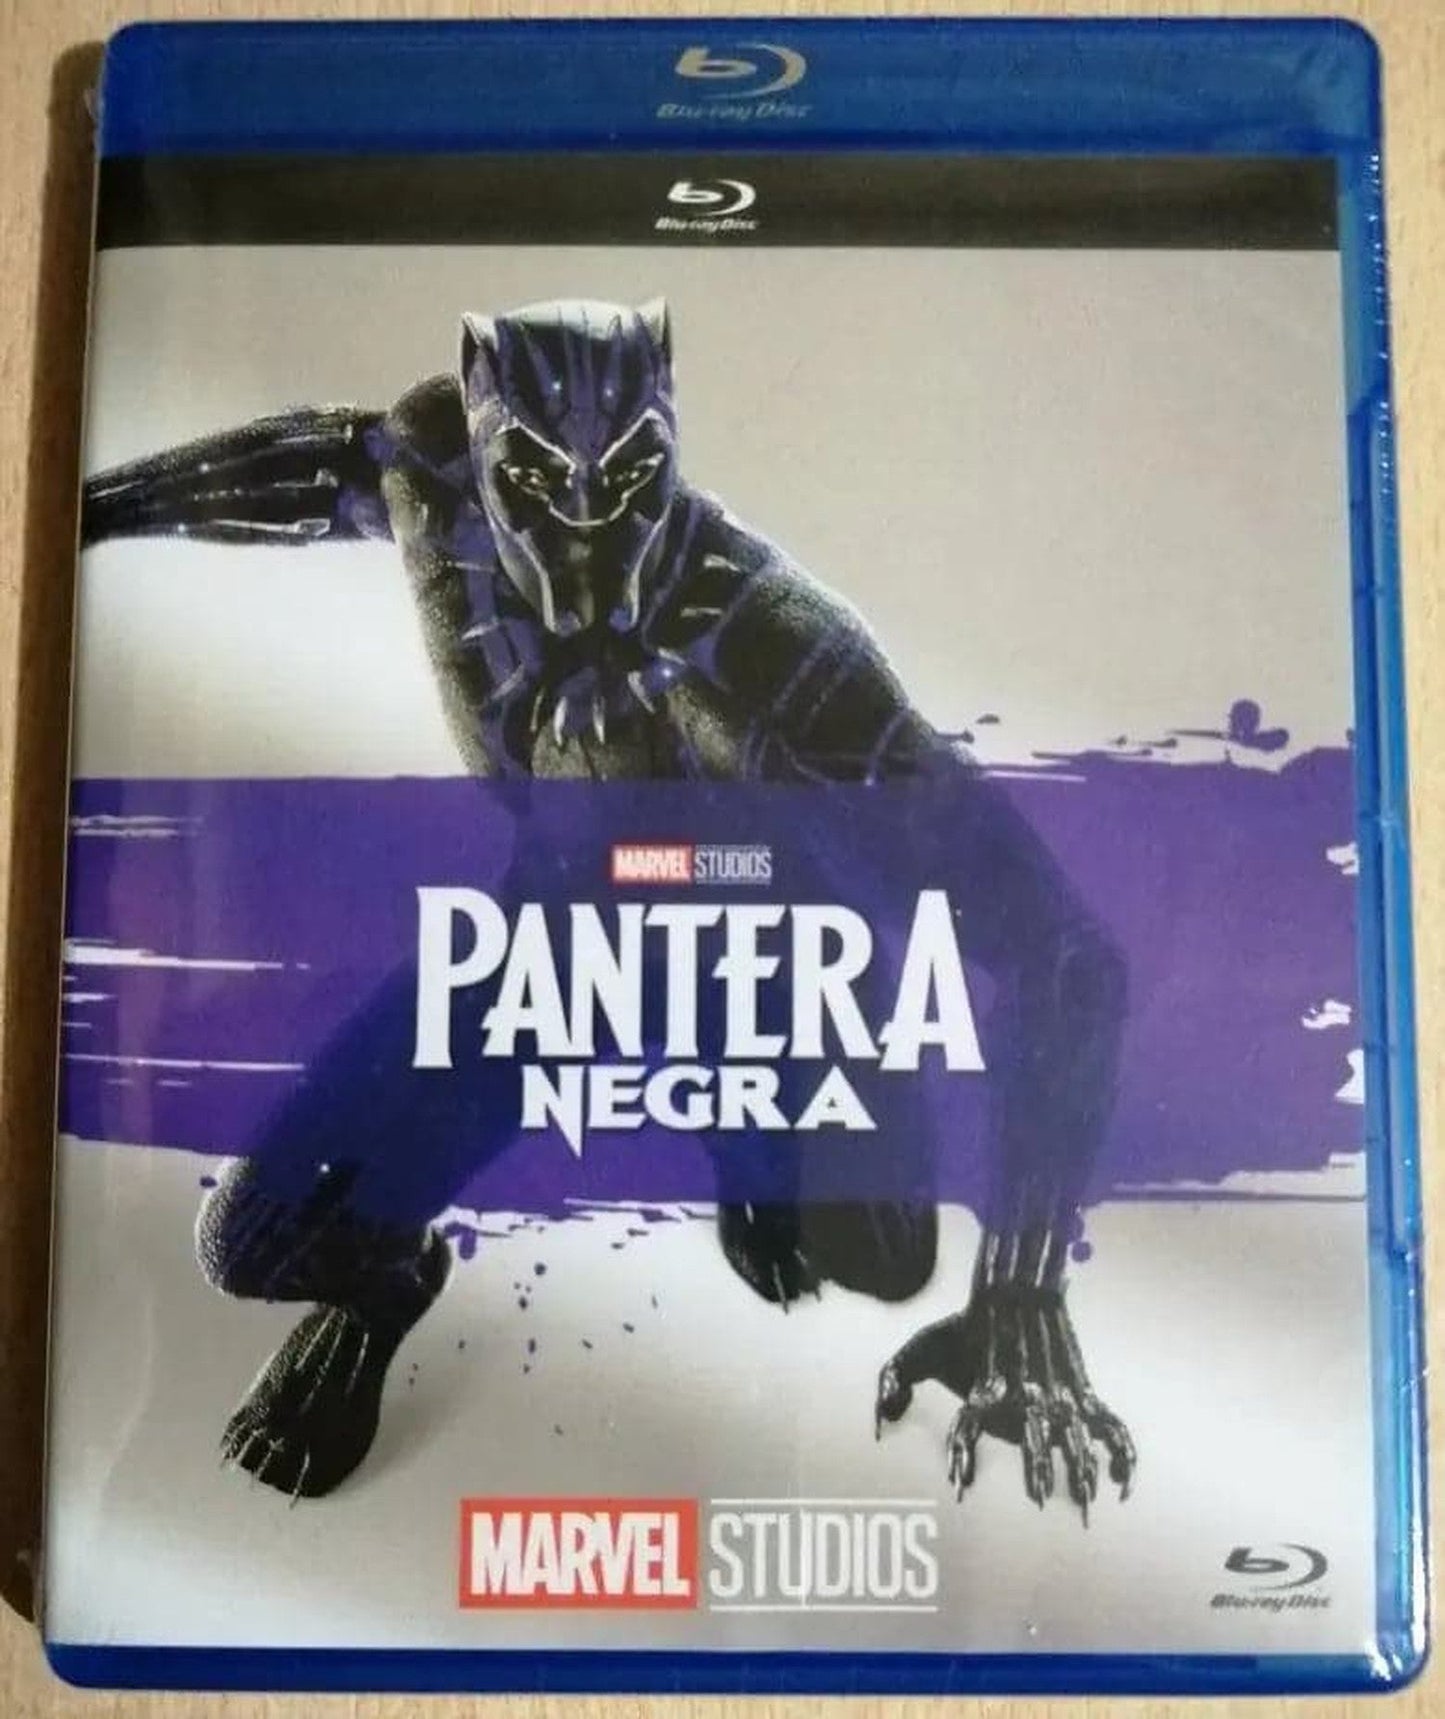 Black Panther (Pantera Negra) Blu-Ray